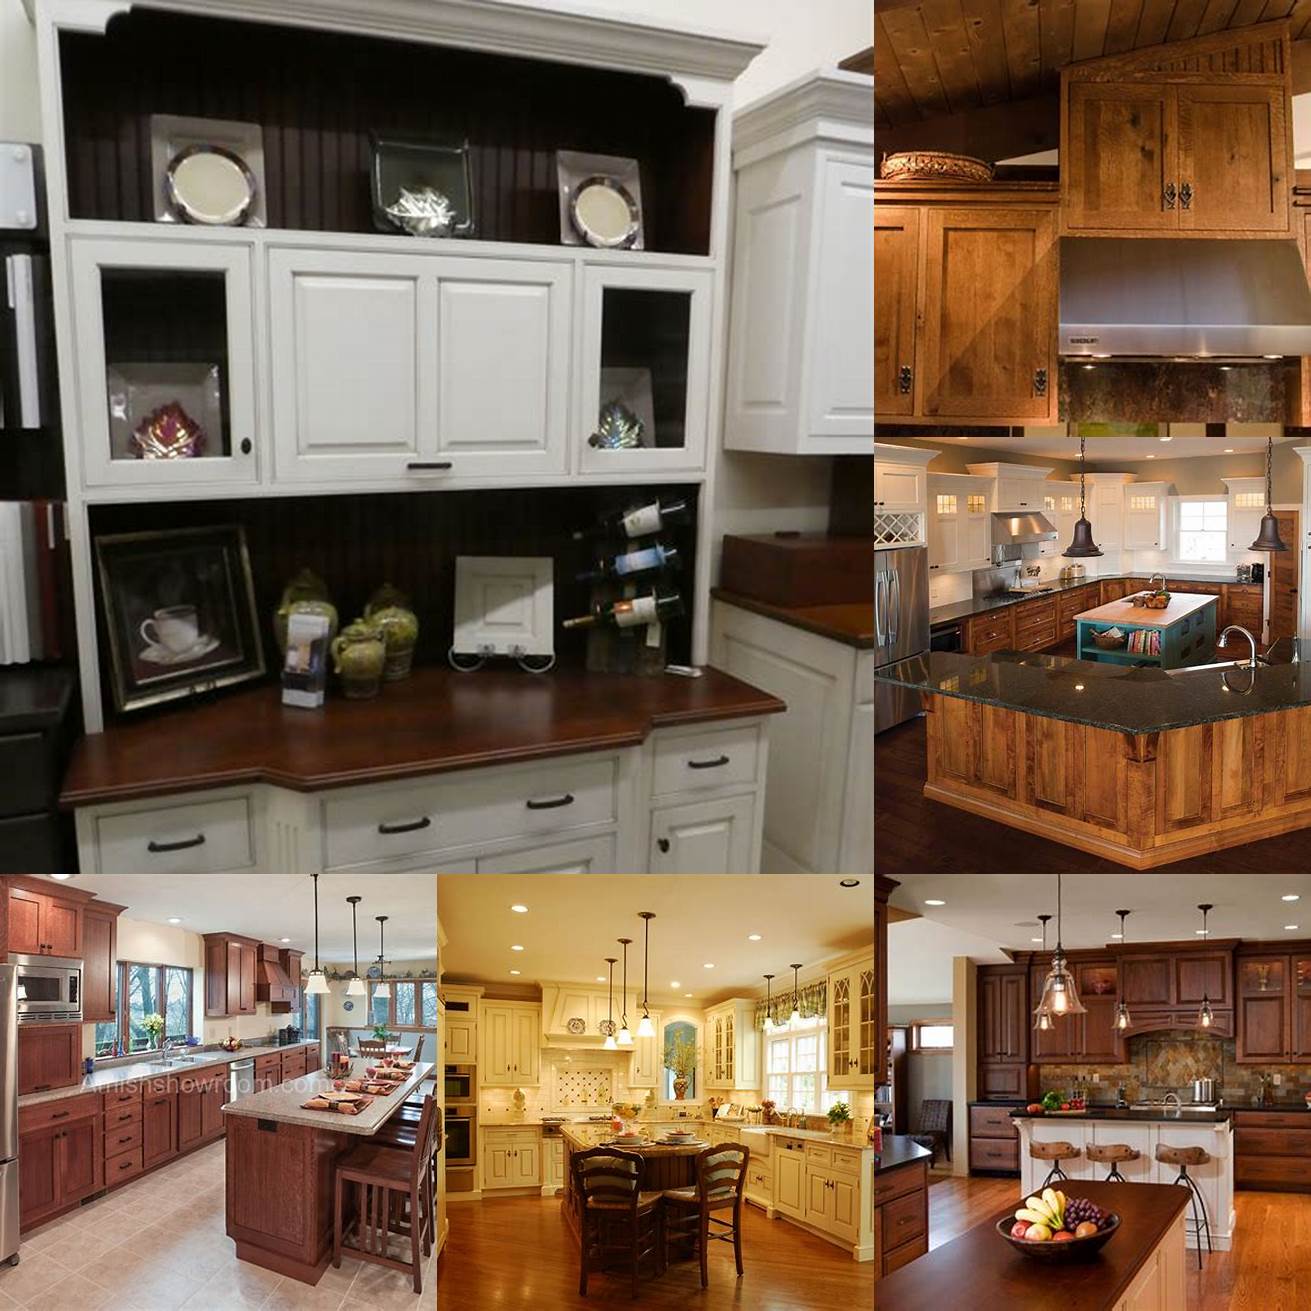 Amish kitchen cabinets in different kitchen styles